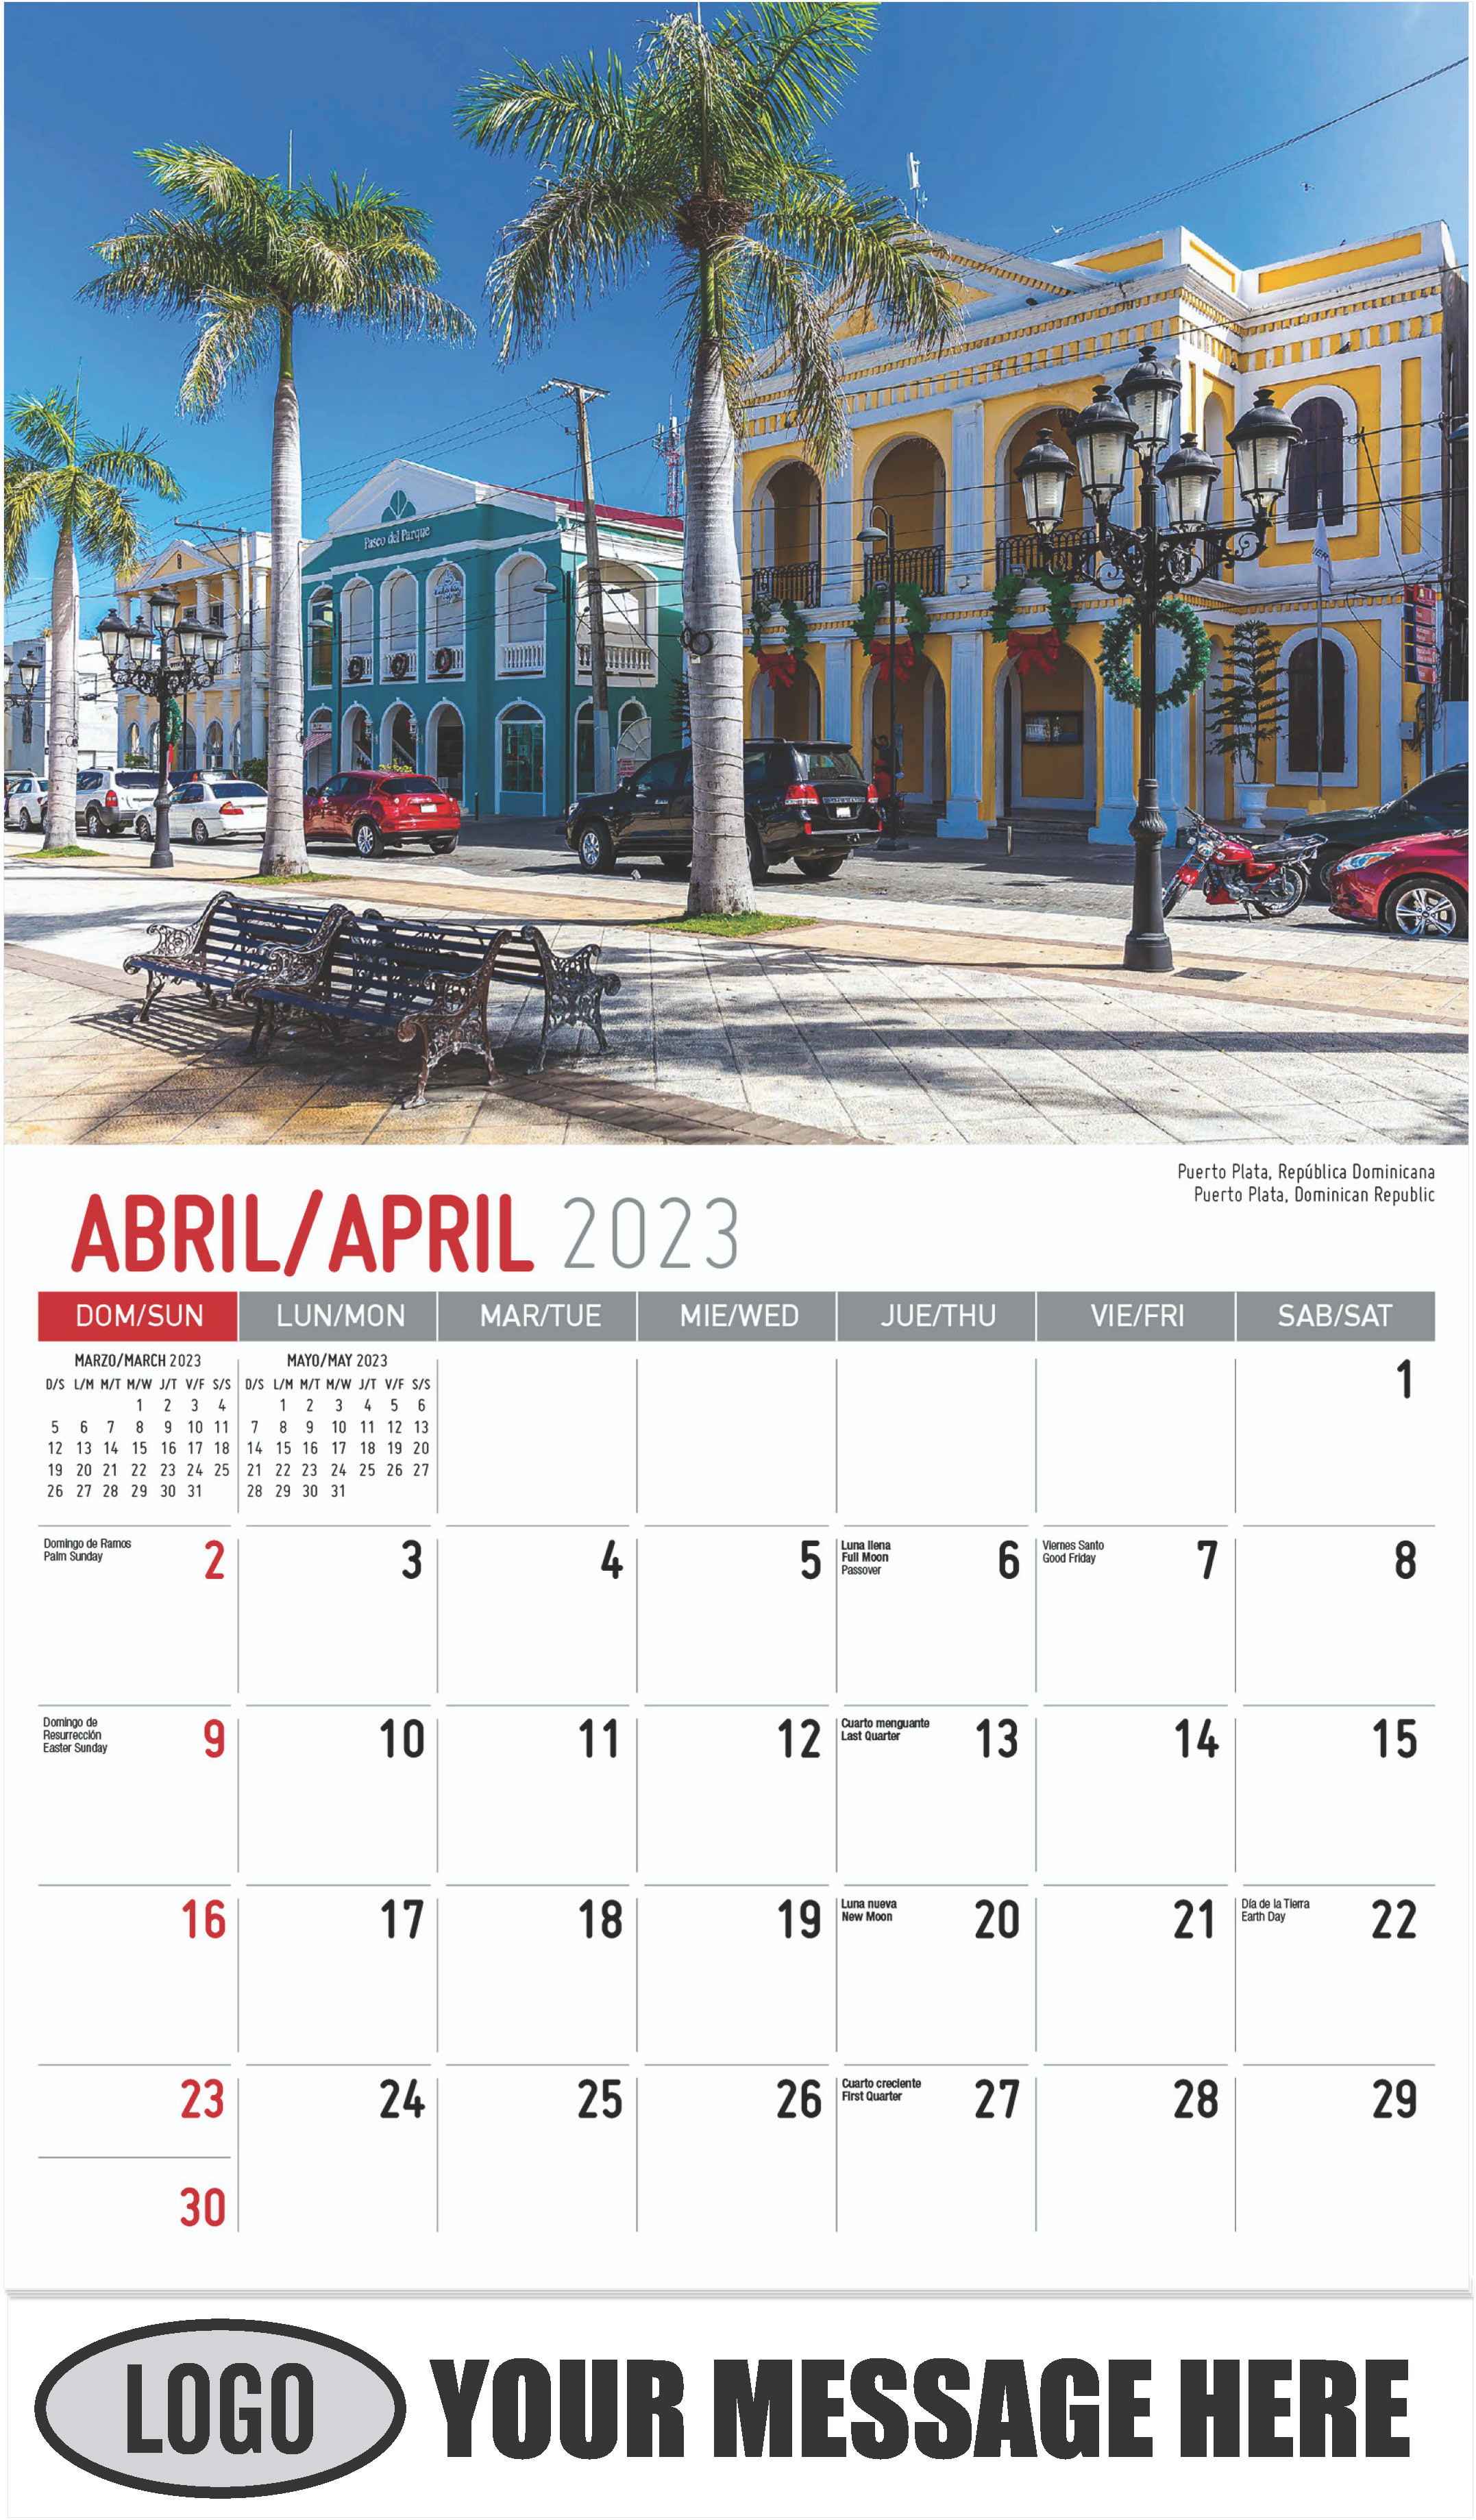 Puerto Plata, Dominican Republic - April - Beauty of Latin America 2023 Promotional Calendar